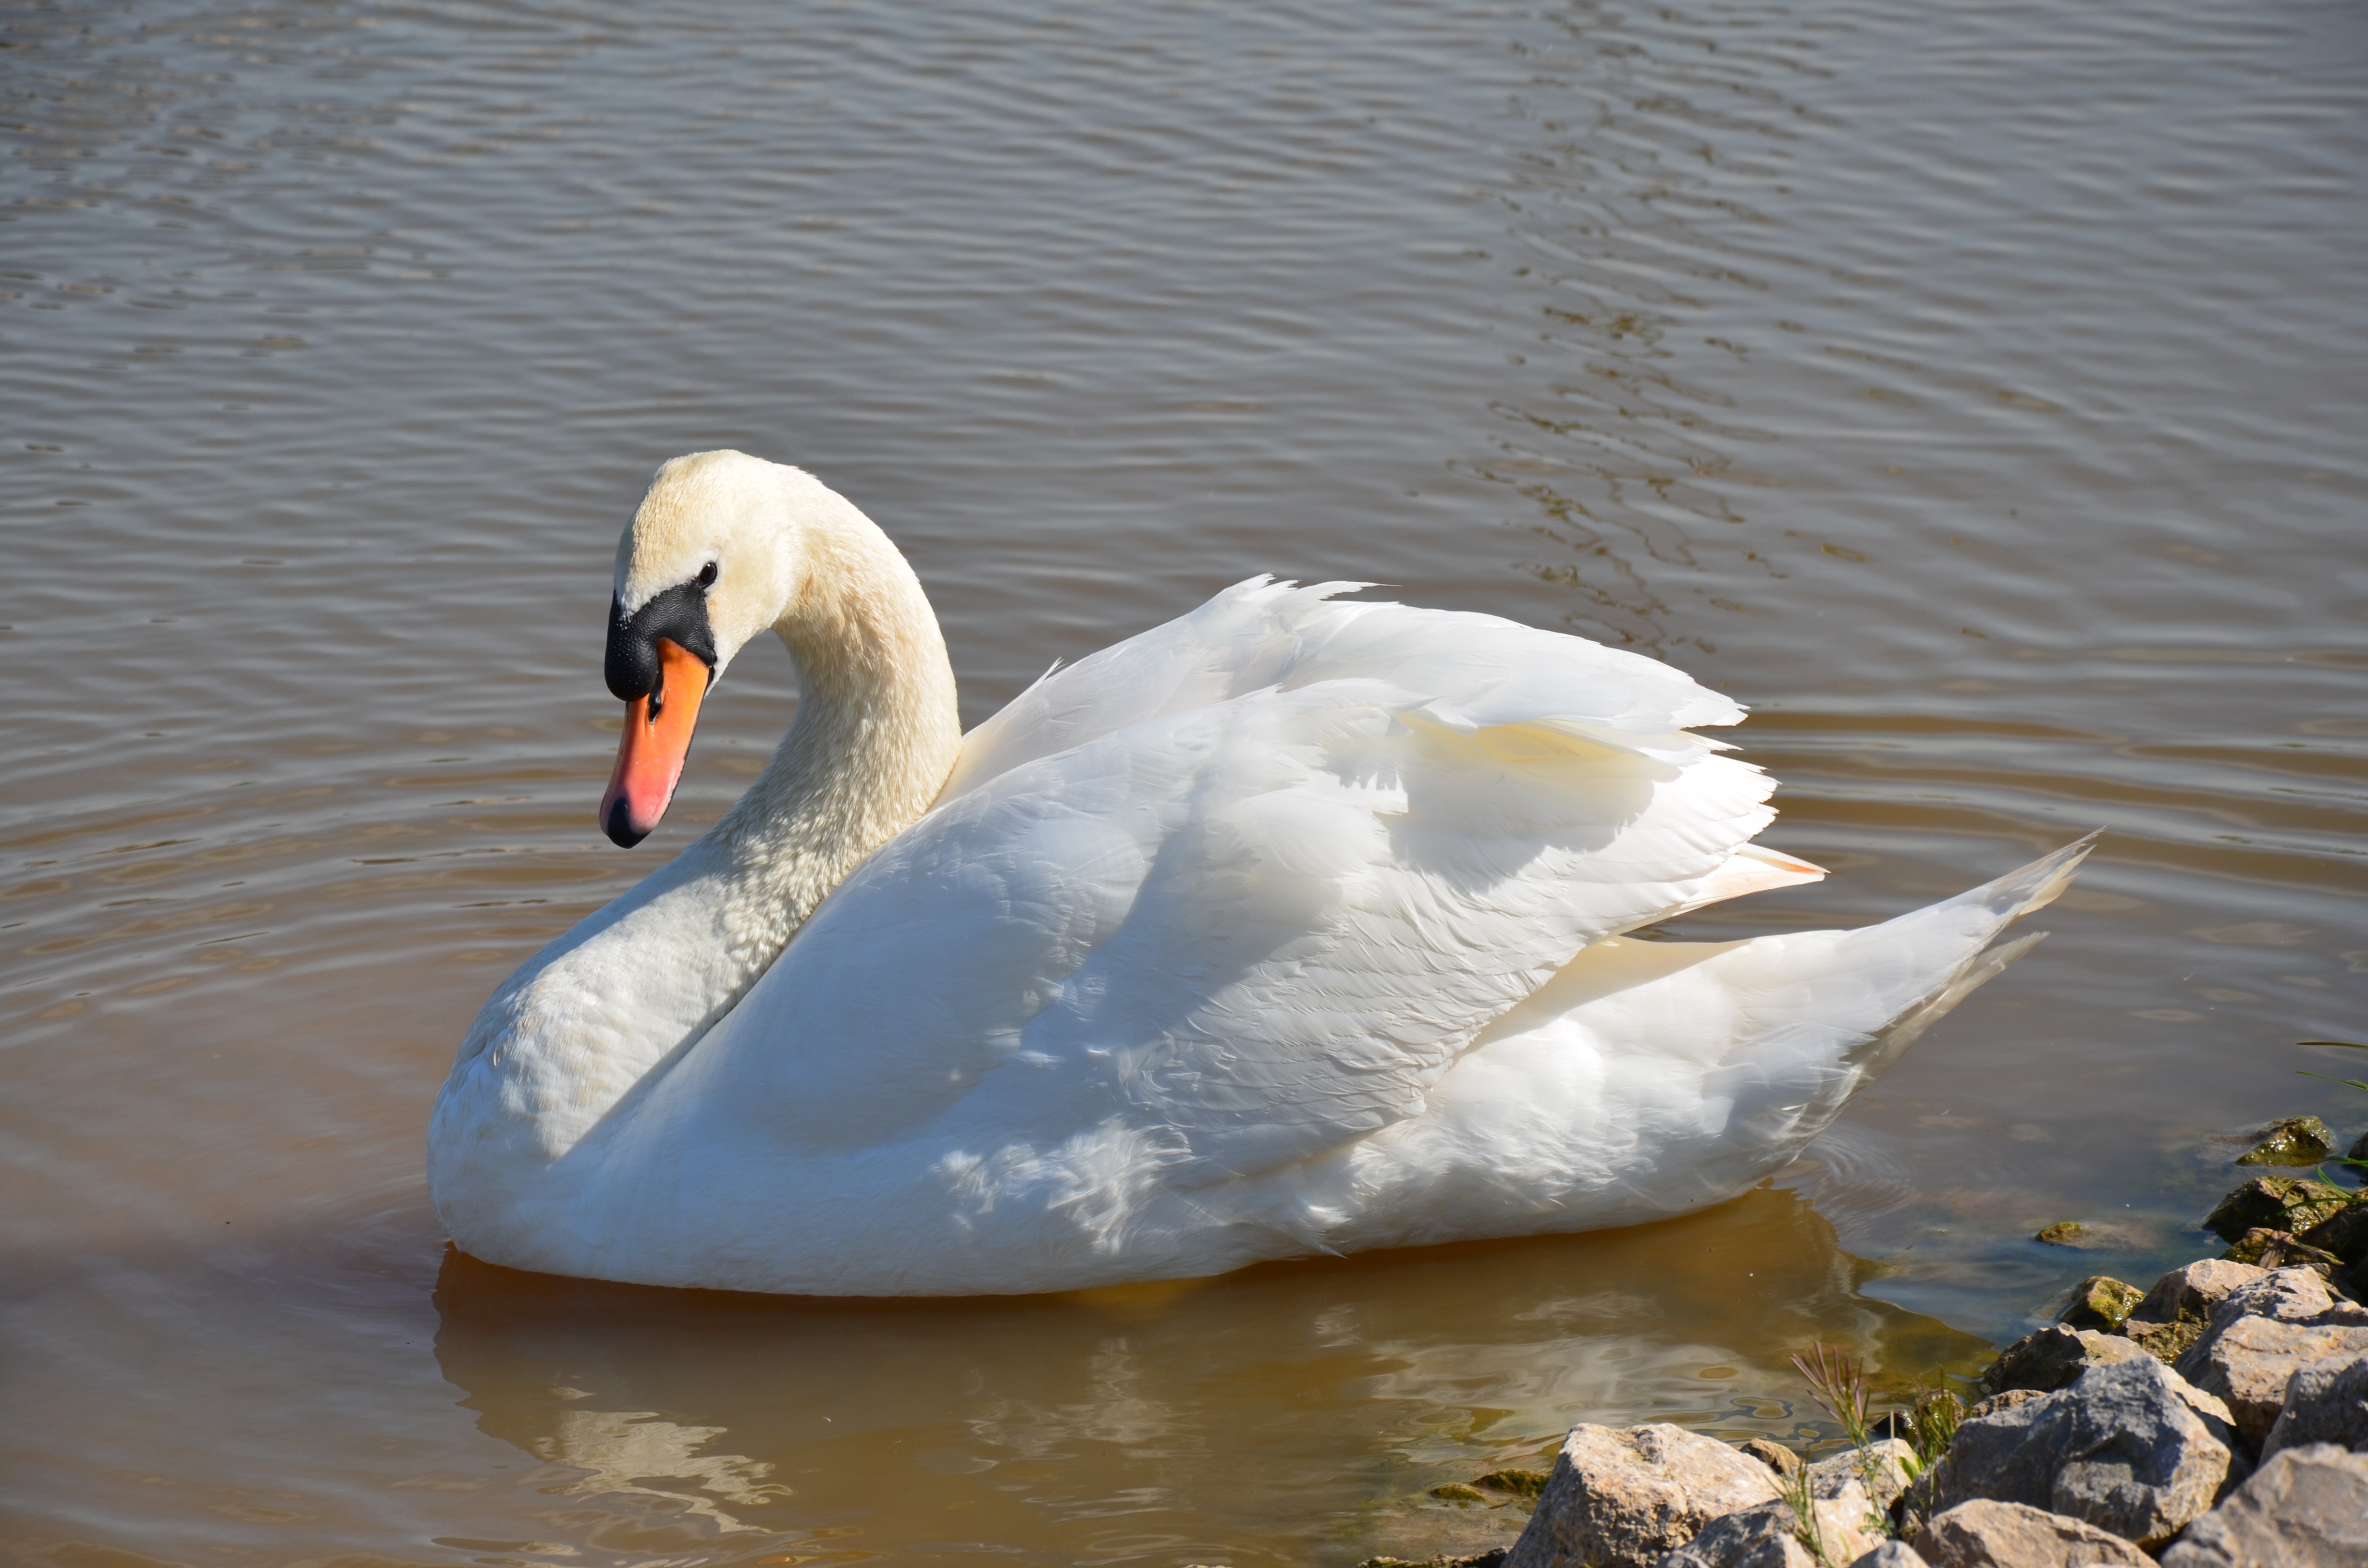 white swan on rippling body of water at daytime